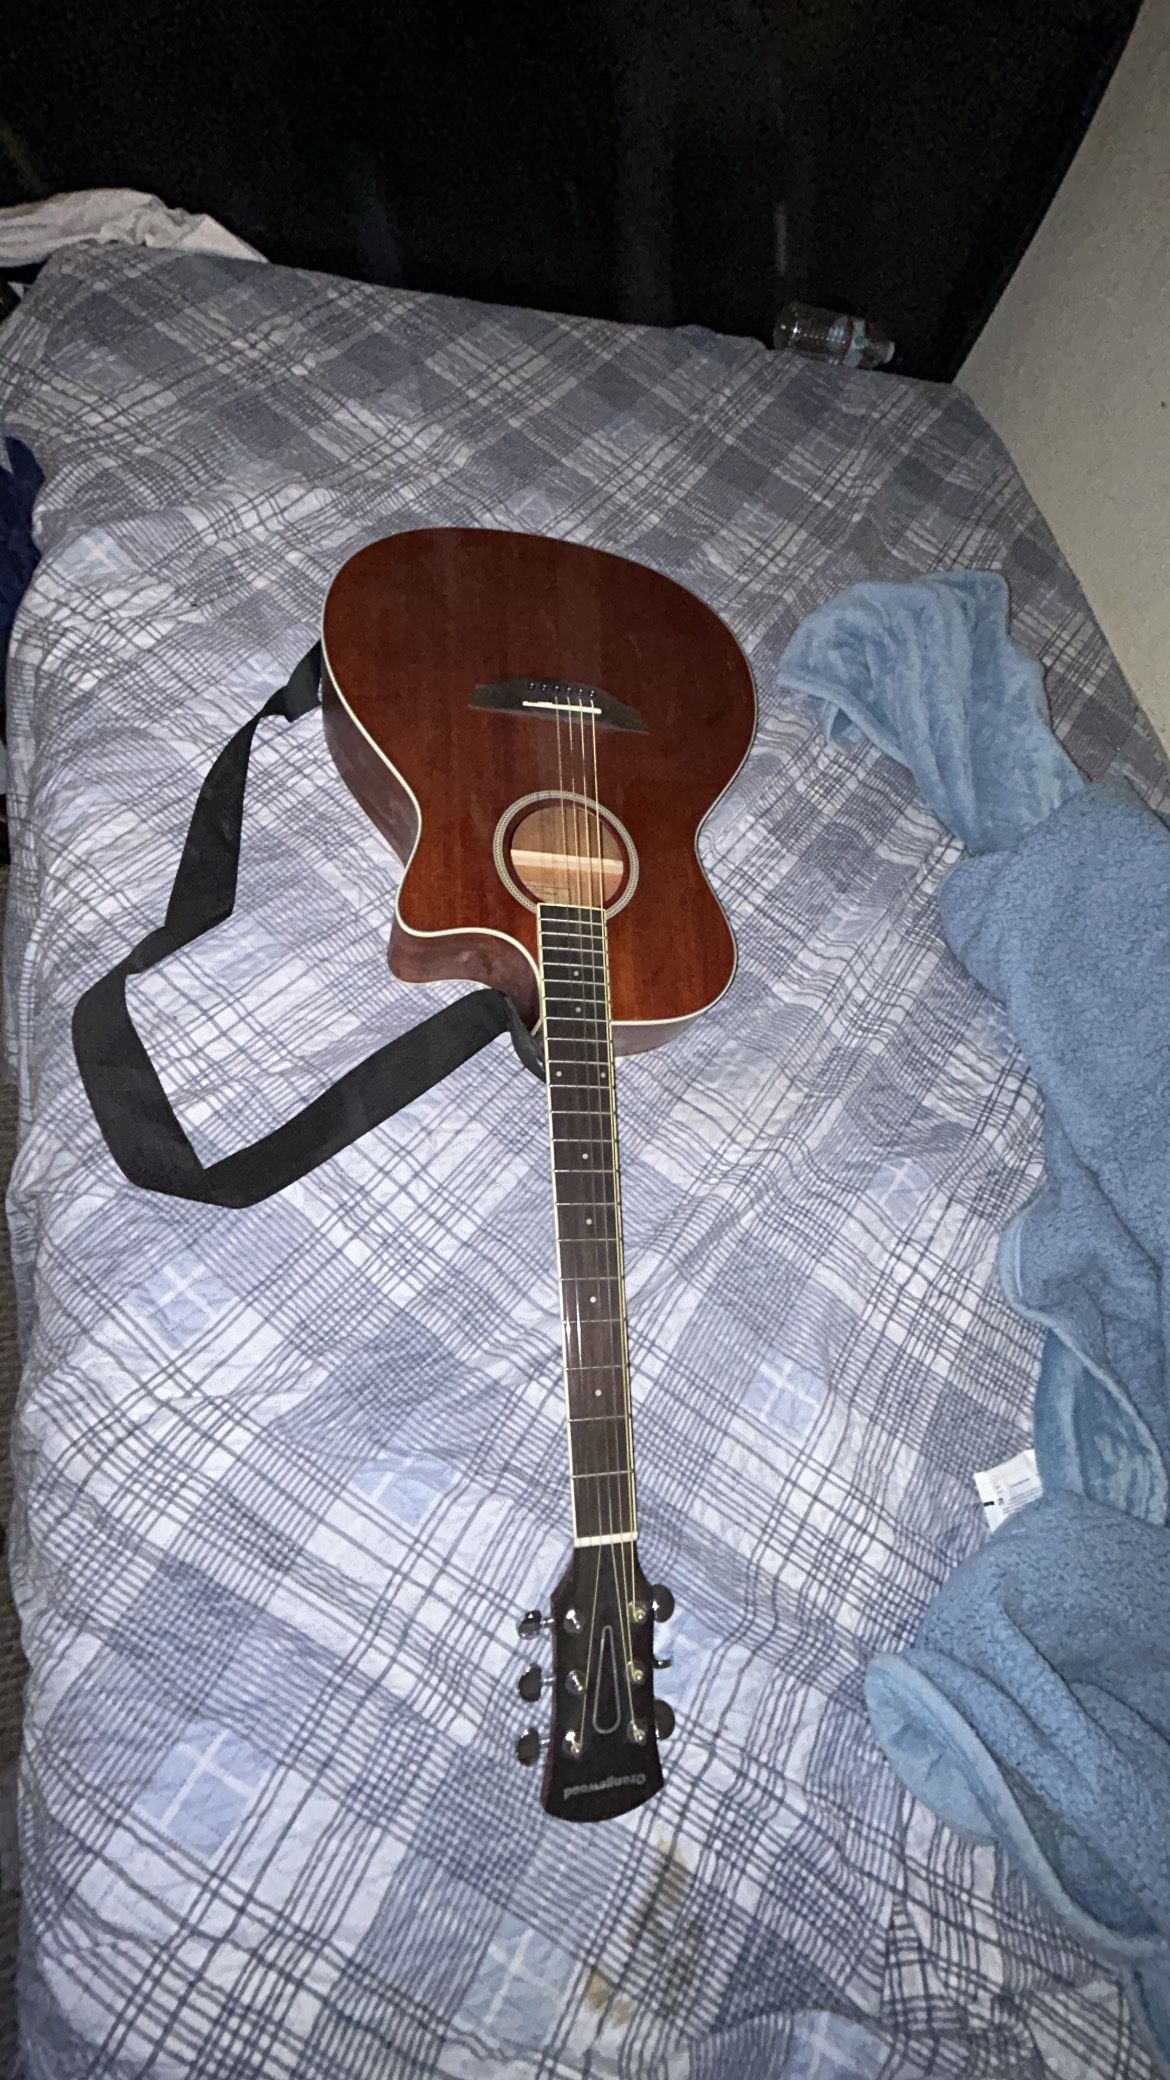 Orange wood Acoustic Guitar $40 OBO 